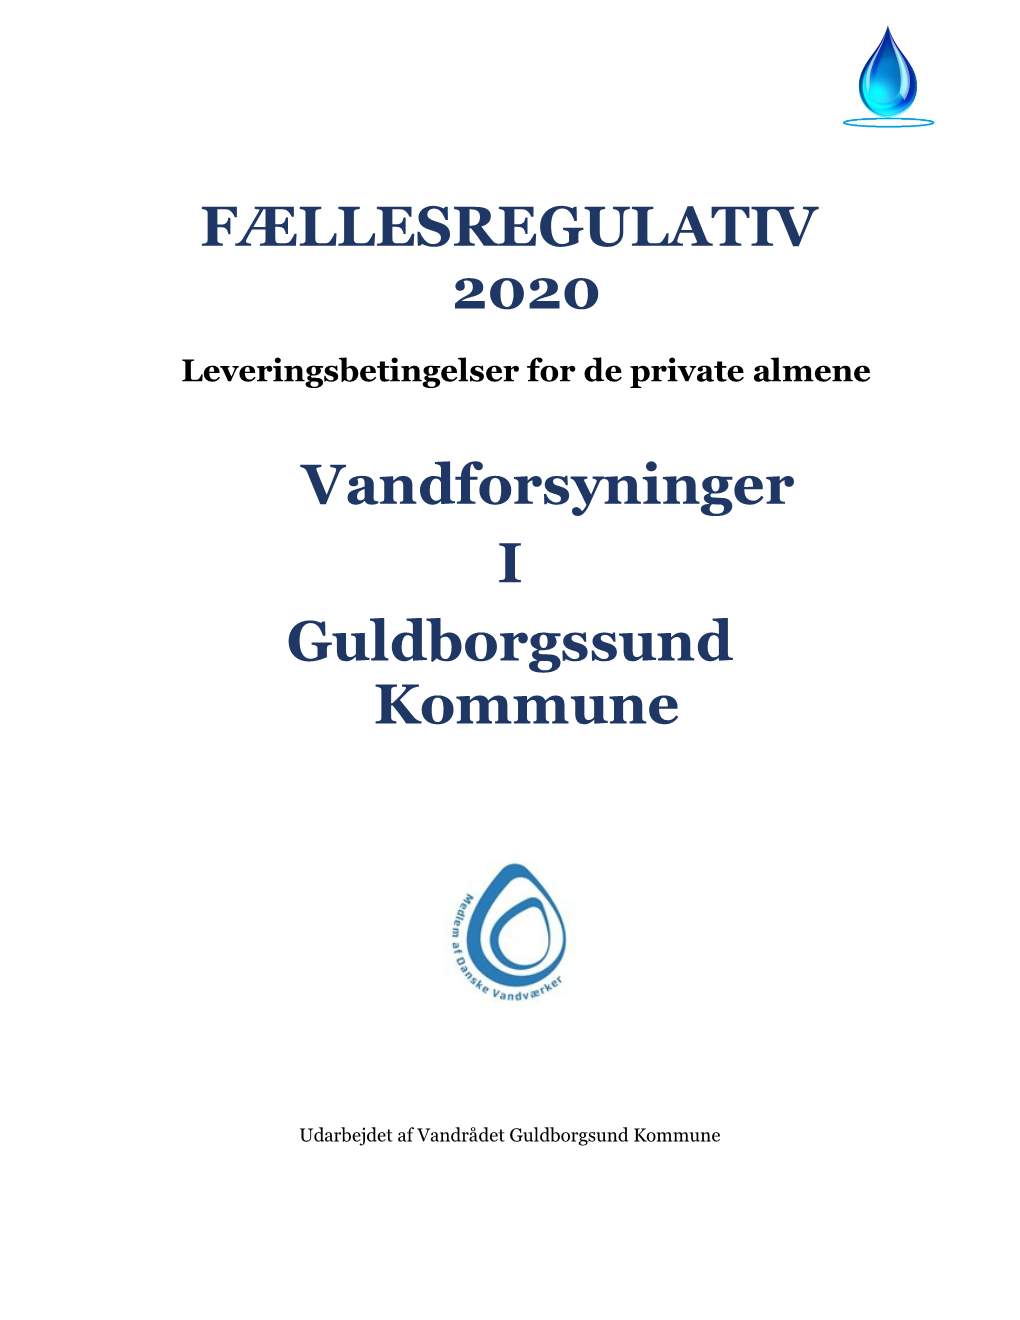 Vandforsyninger I Guldborgssund Kommune